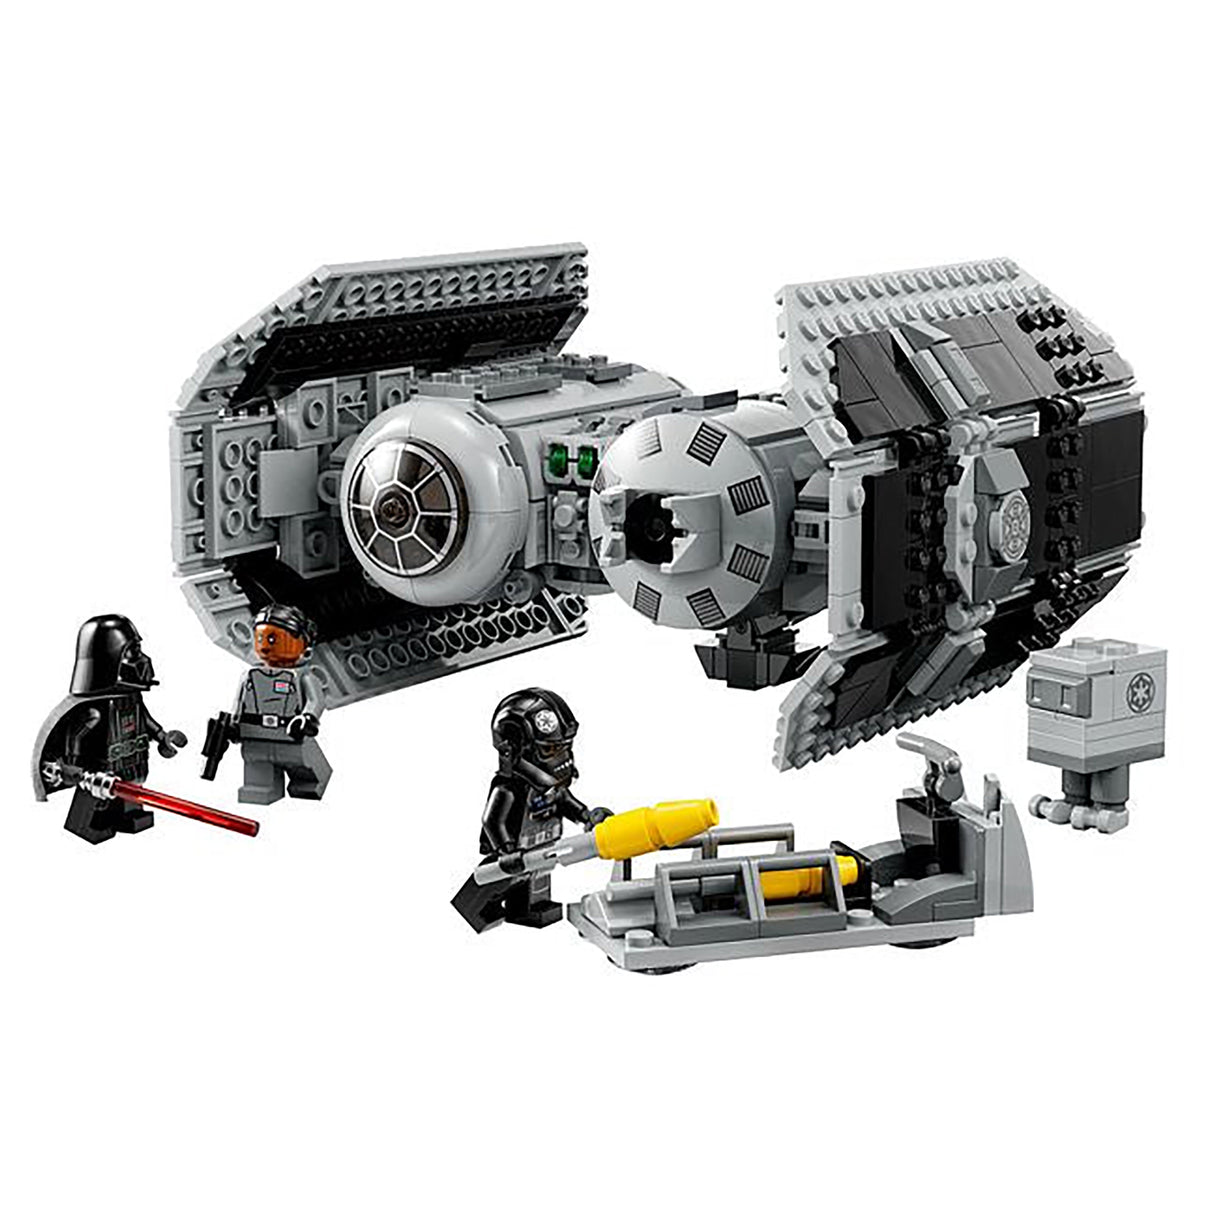 LEGO Star Wars Tie Bomber 75347 (625 pieces)